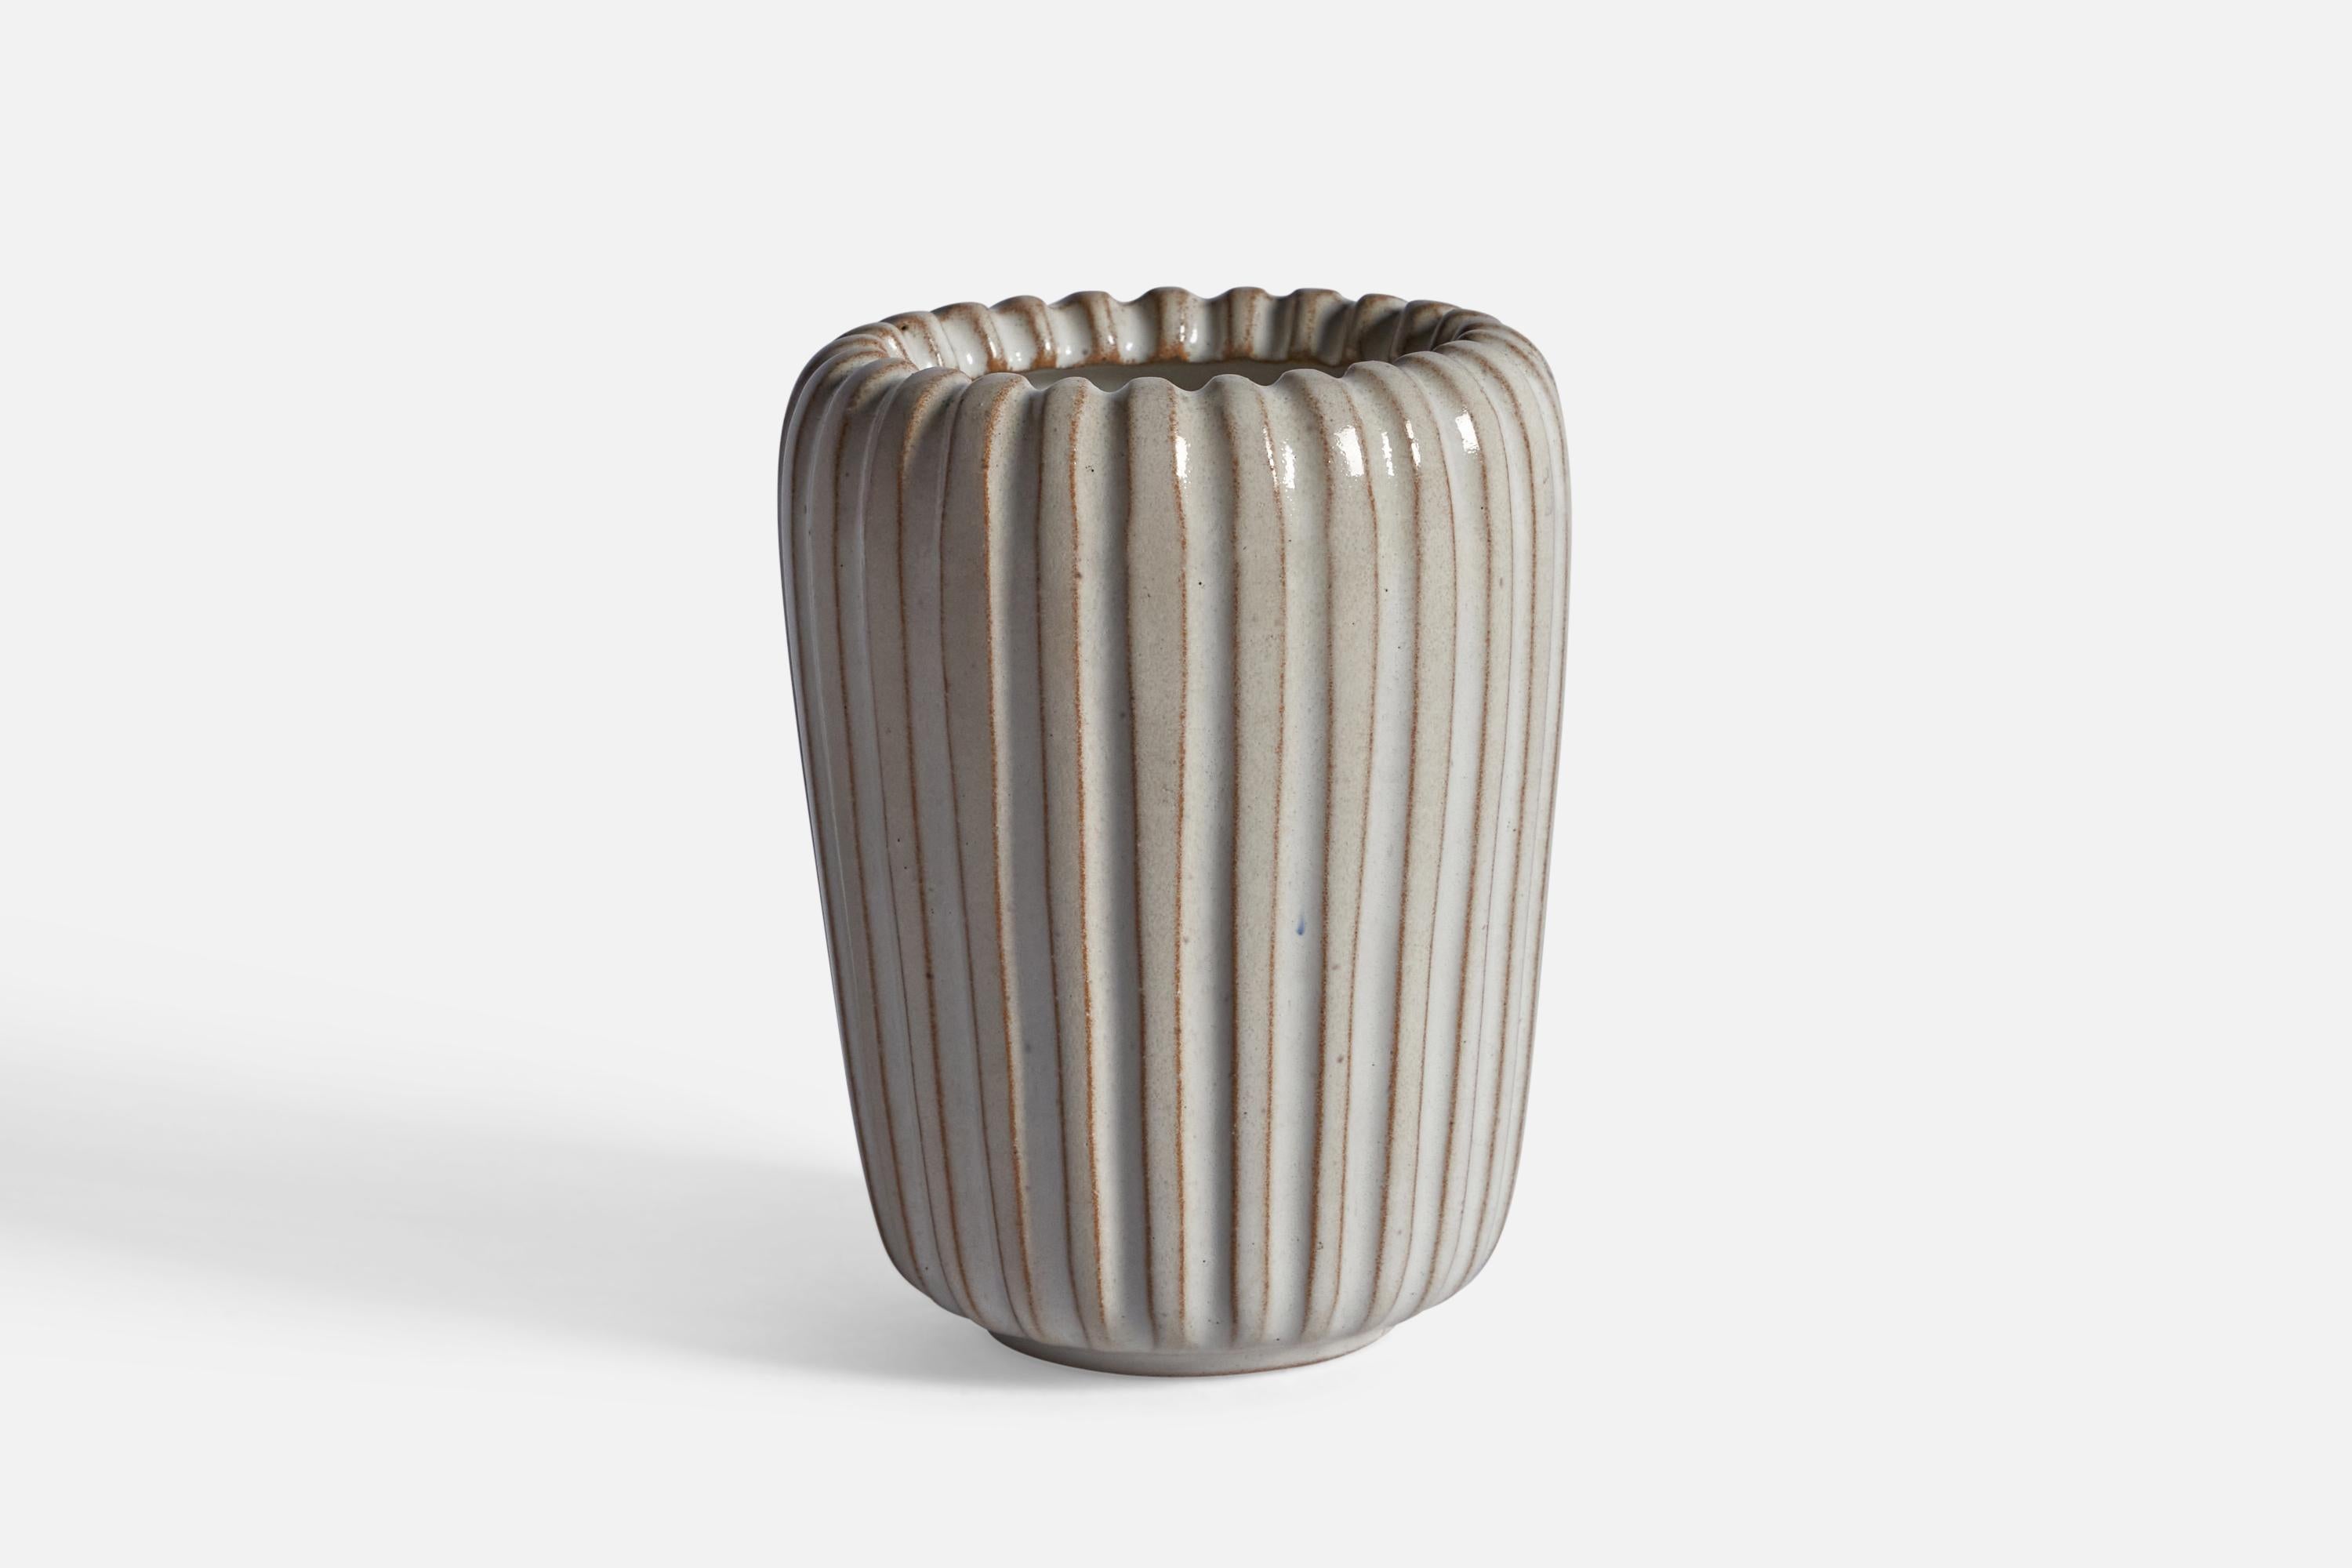 A fluted grey-glazed stoneware vase designed and produced by  Ejner Johansen, Denmark, c. 1960s.